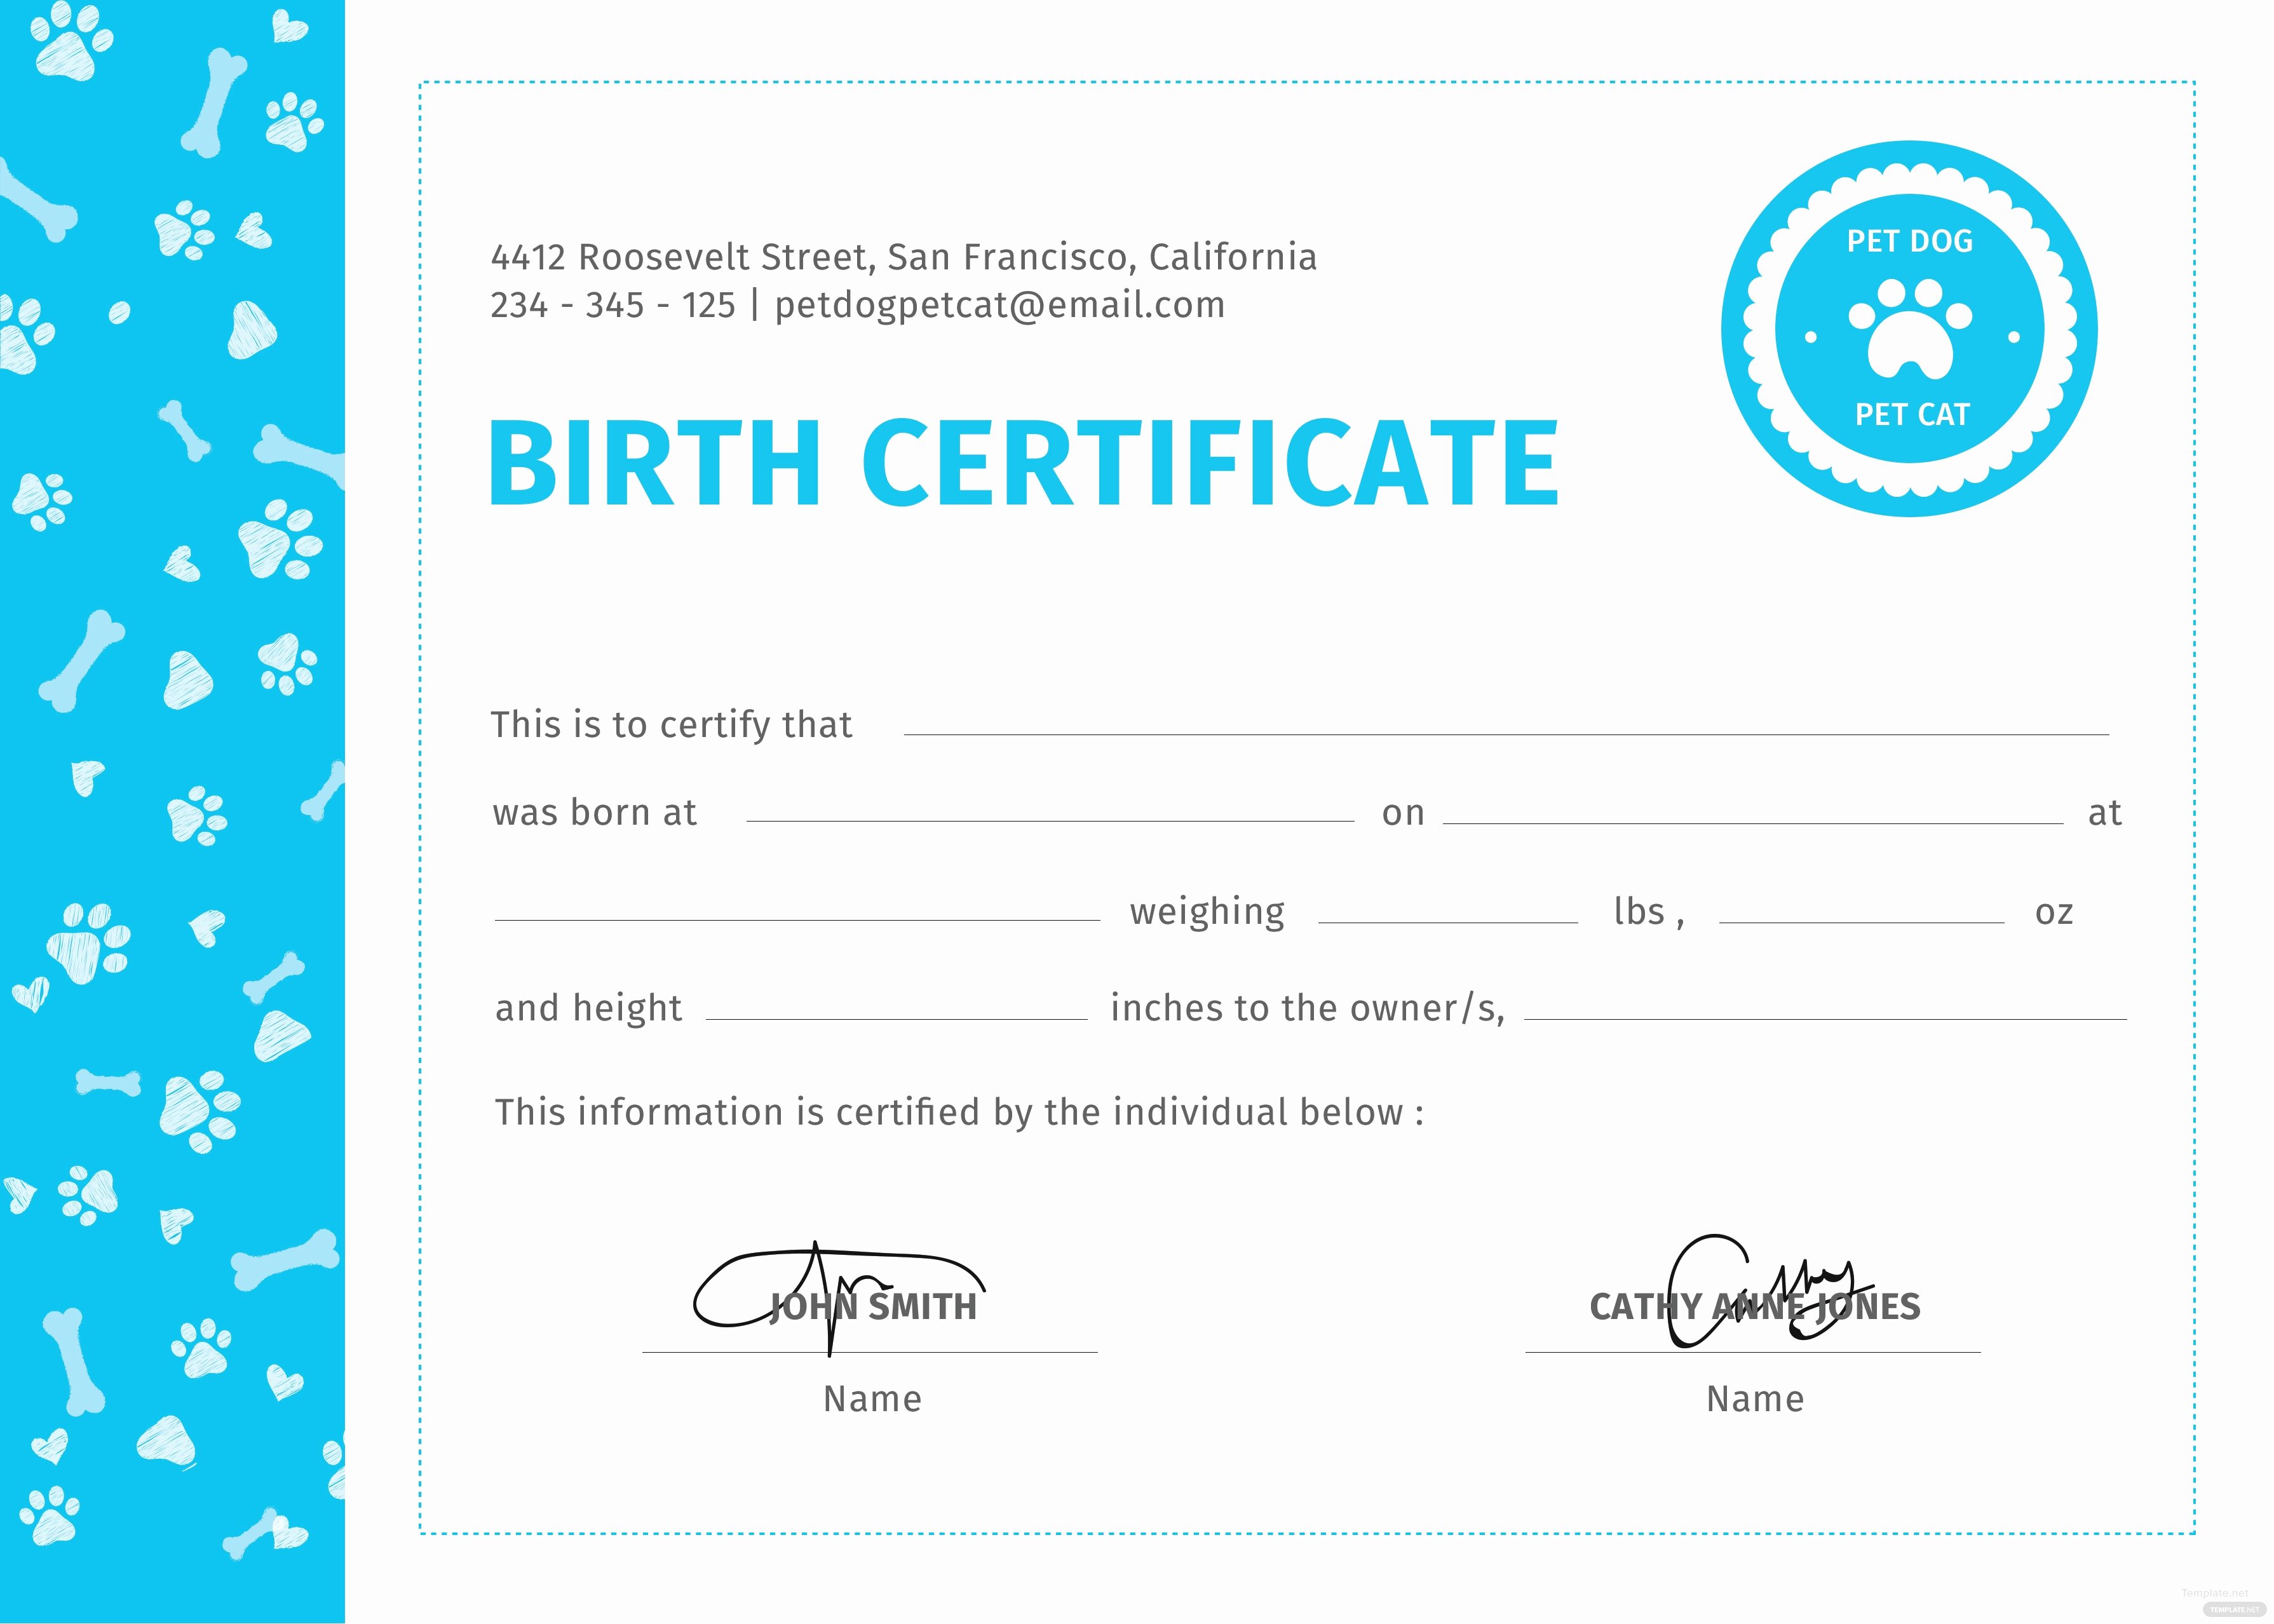 Pet Health Certificate Template Luxury Free Pet Birth Certificate Template In Psd Ms Word